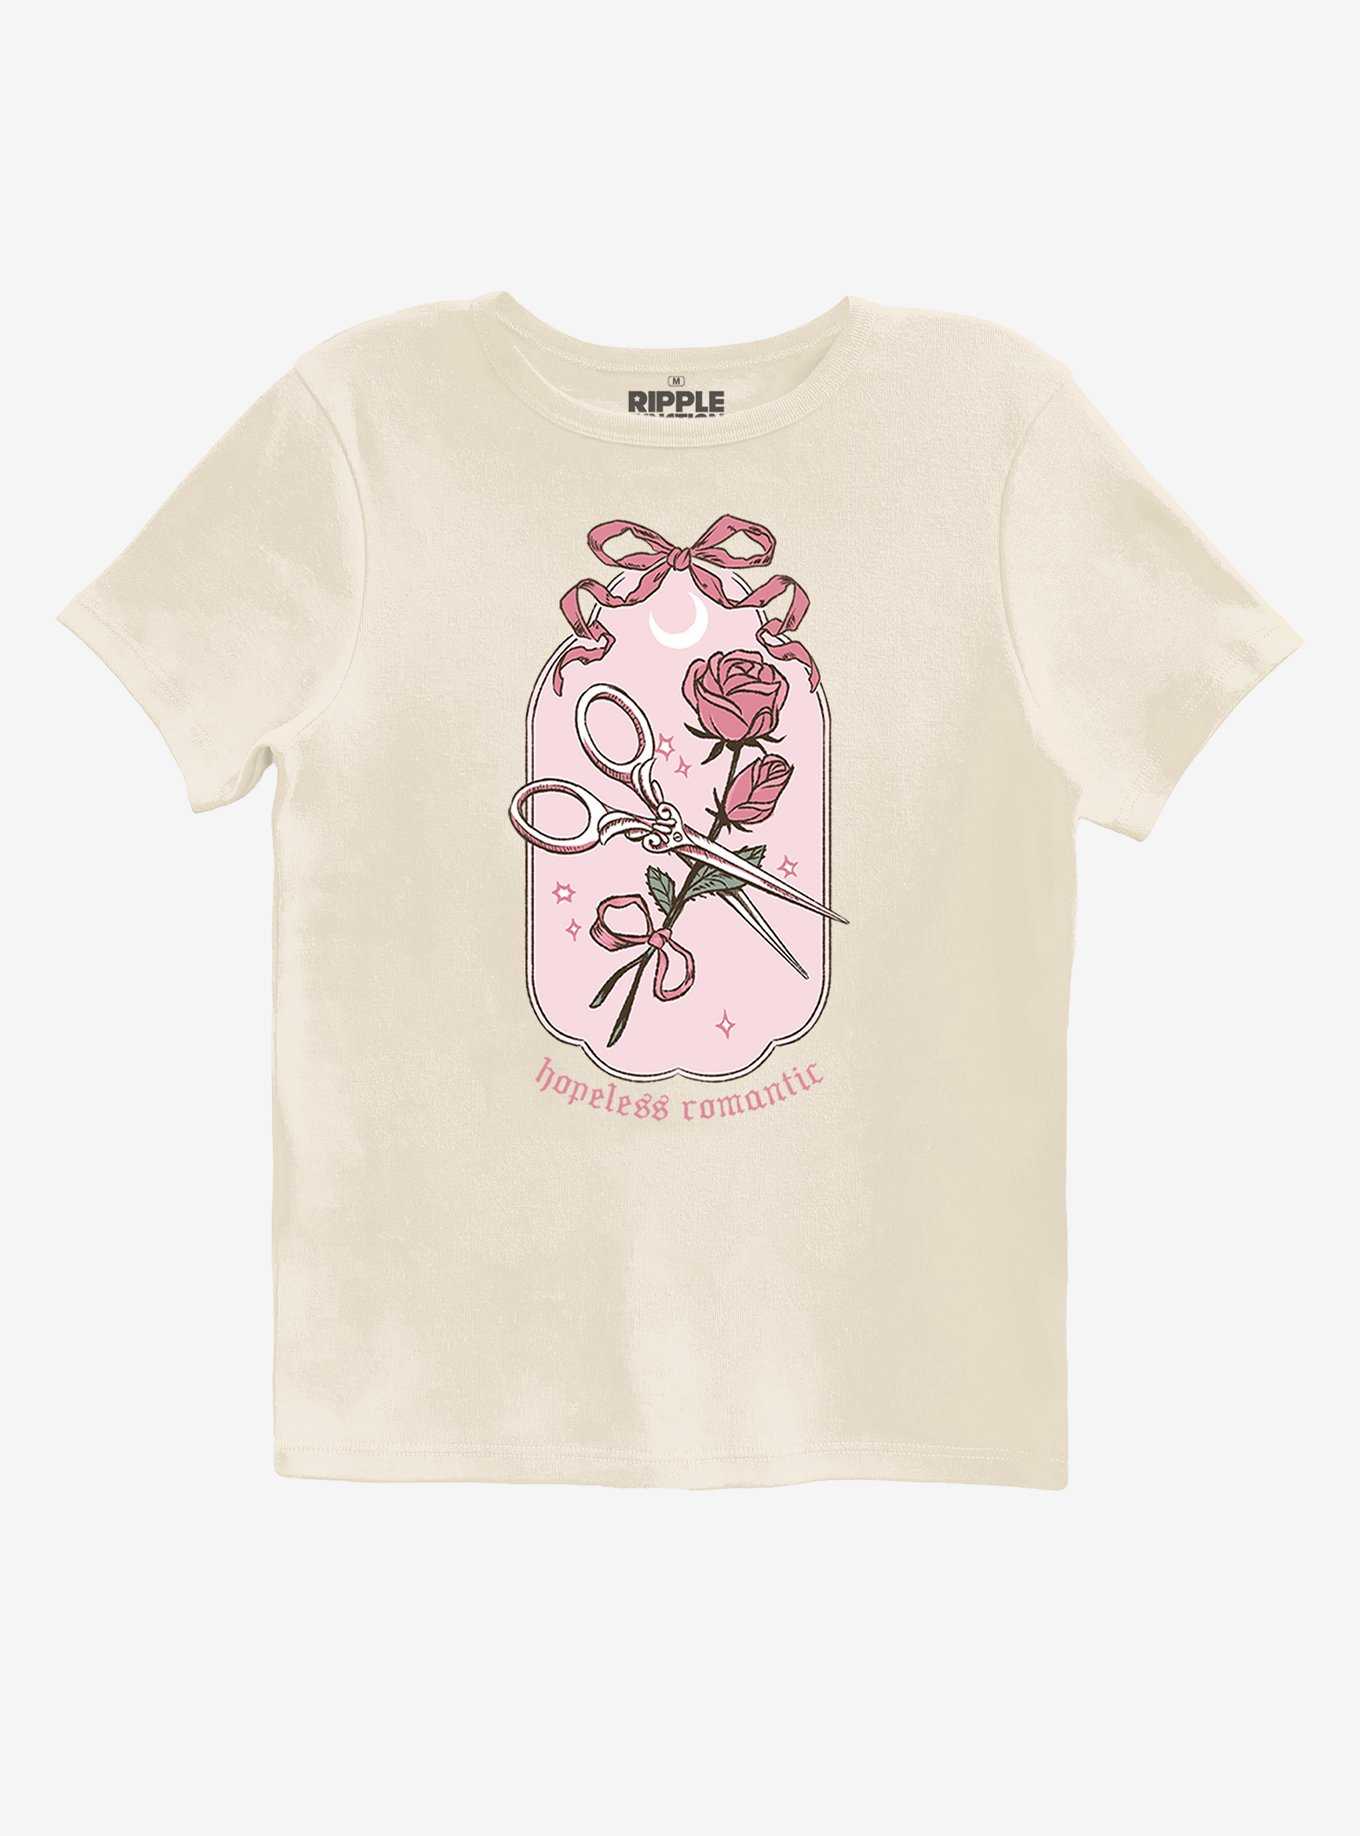 Hopeless Romantic Girls Baby T-Shirt, , hi-res